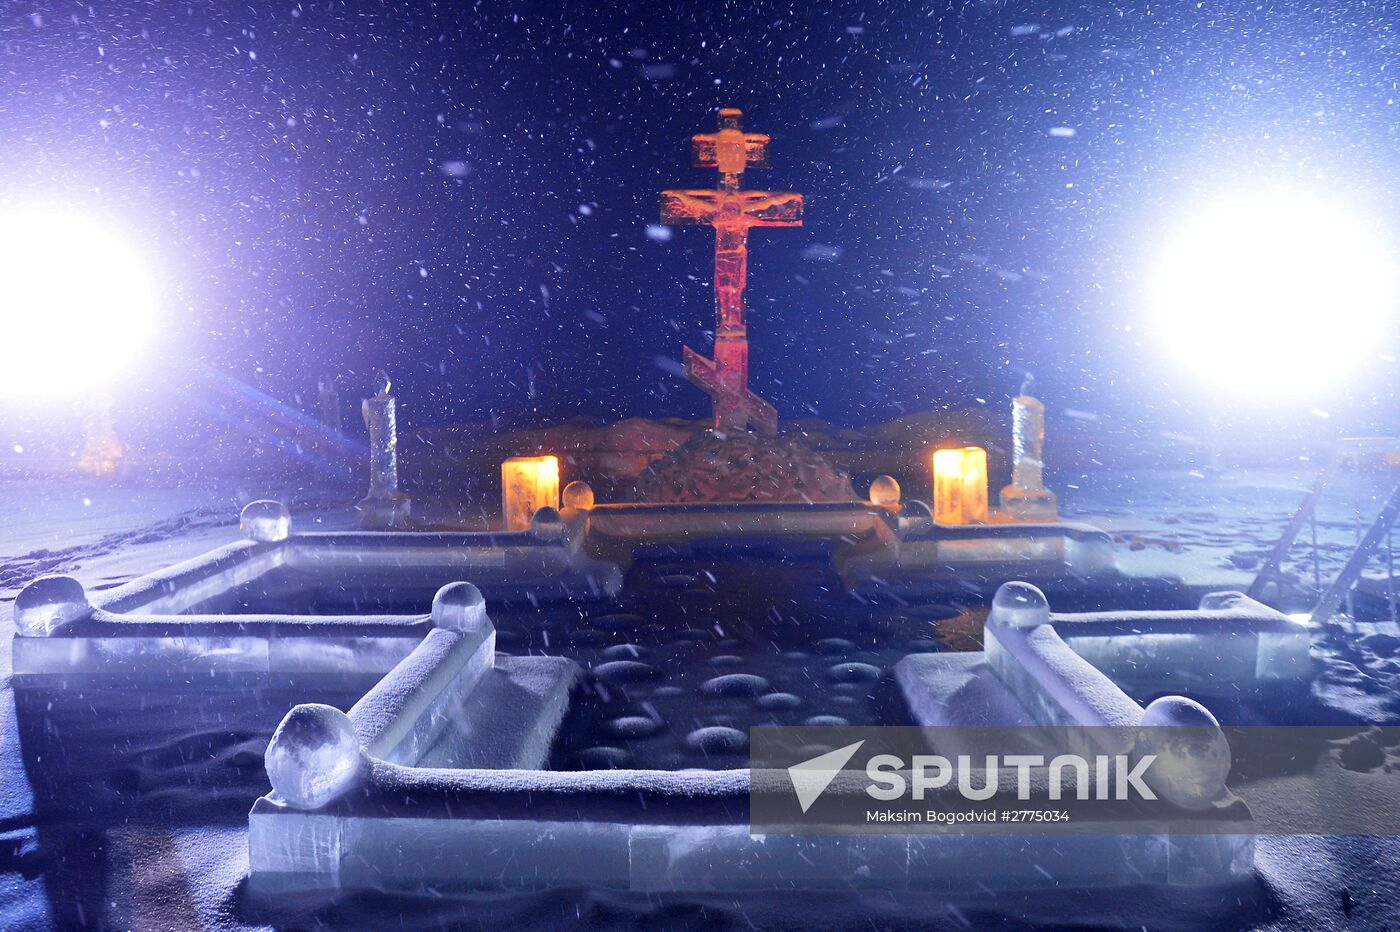 Epiphany celebrated in Russian regions